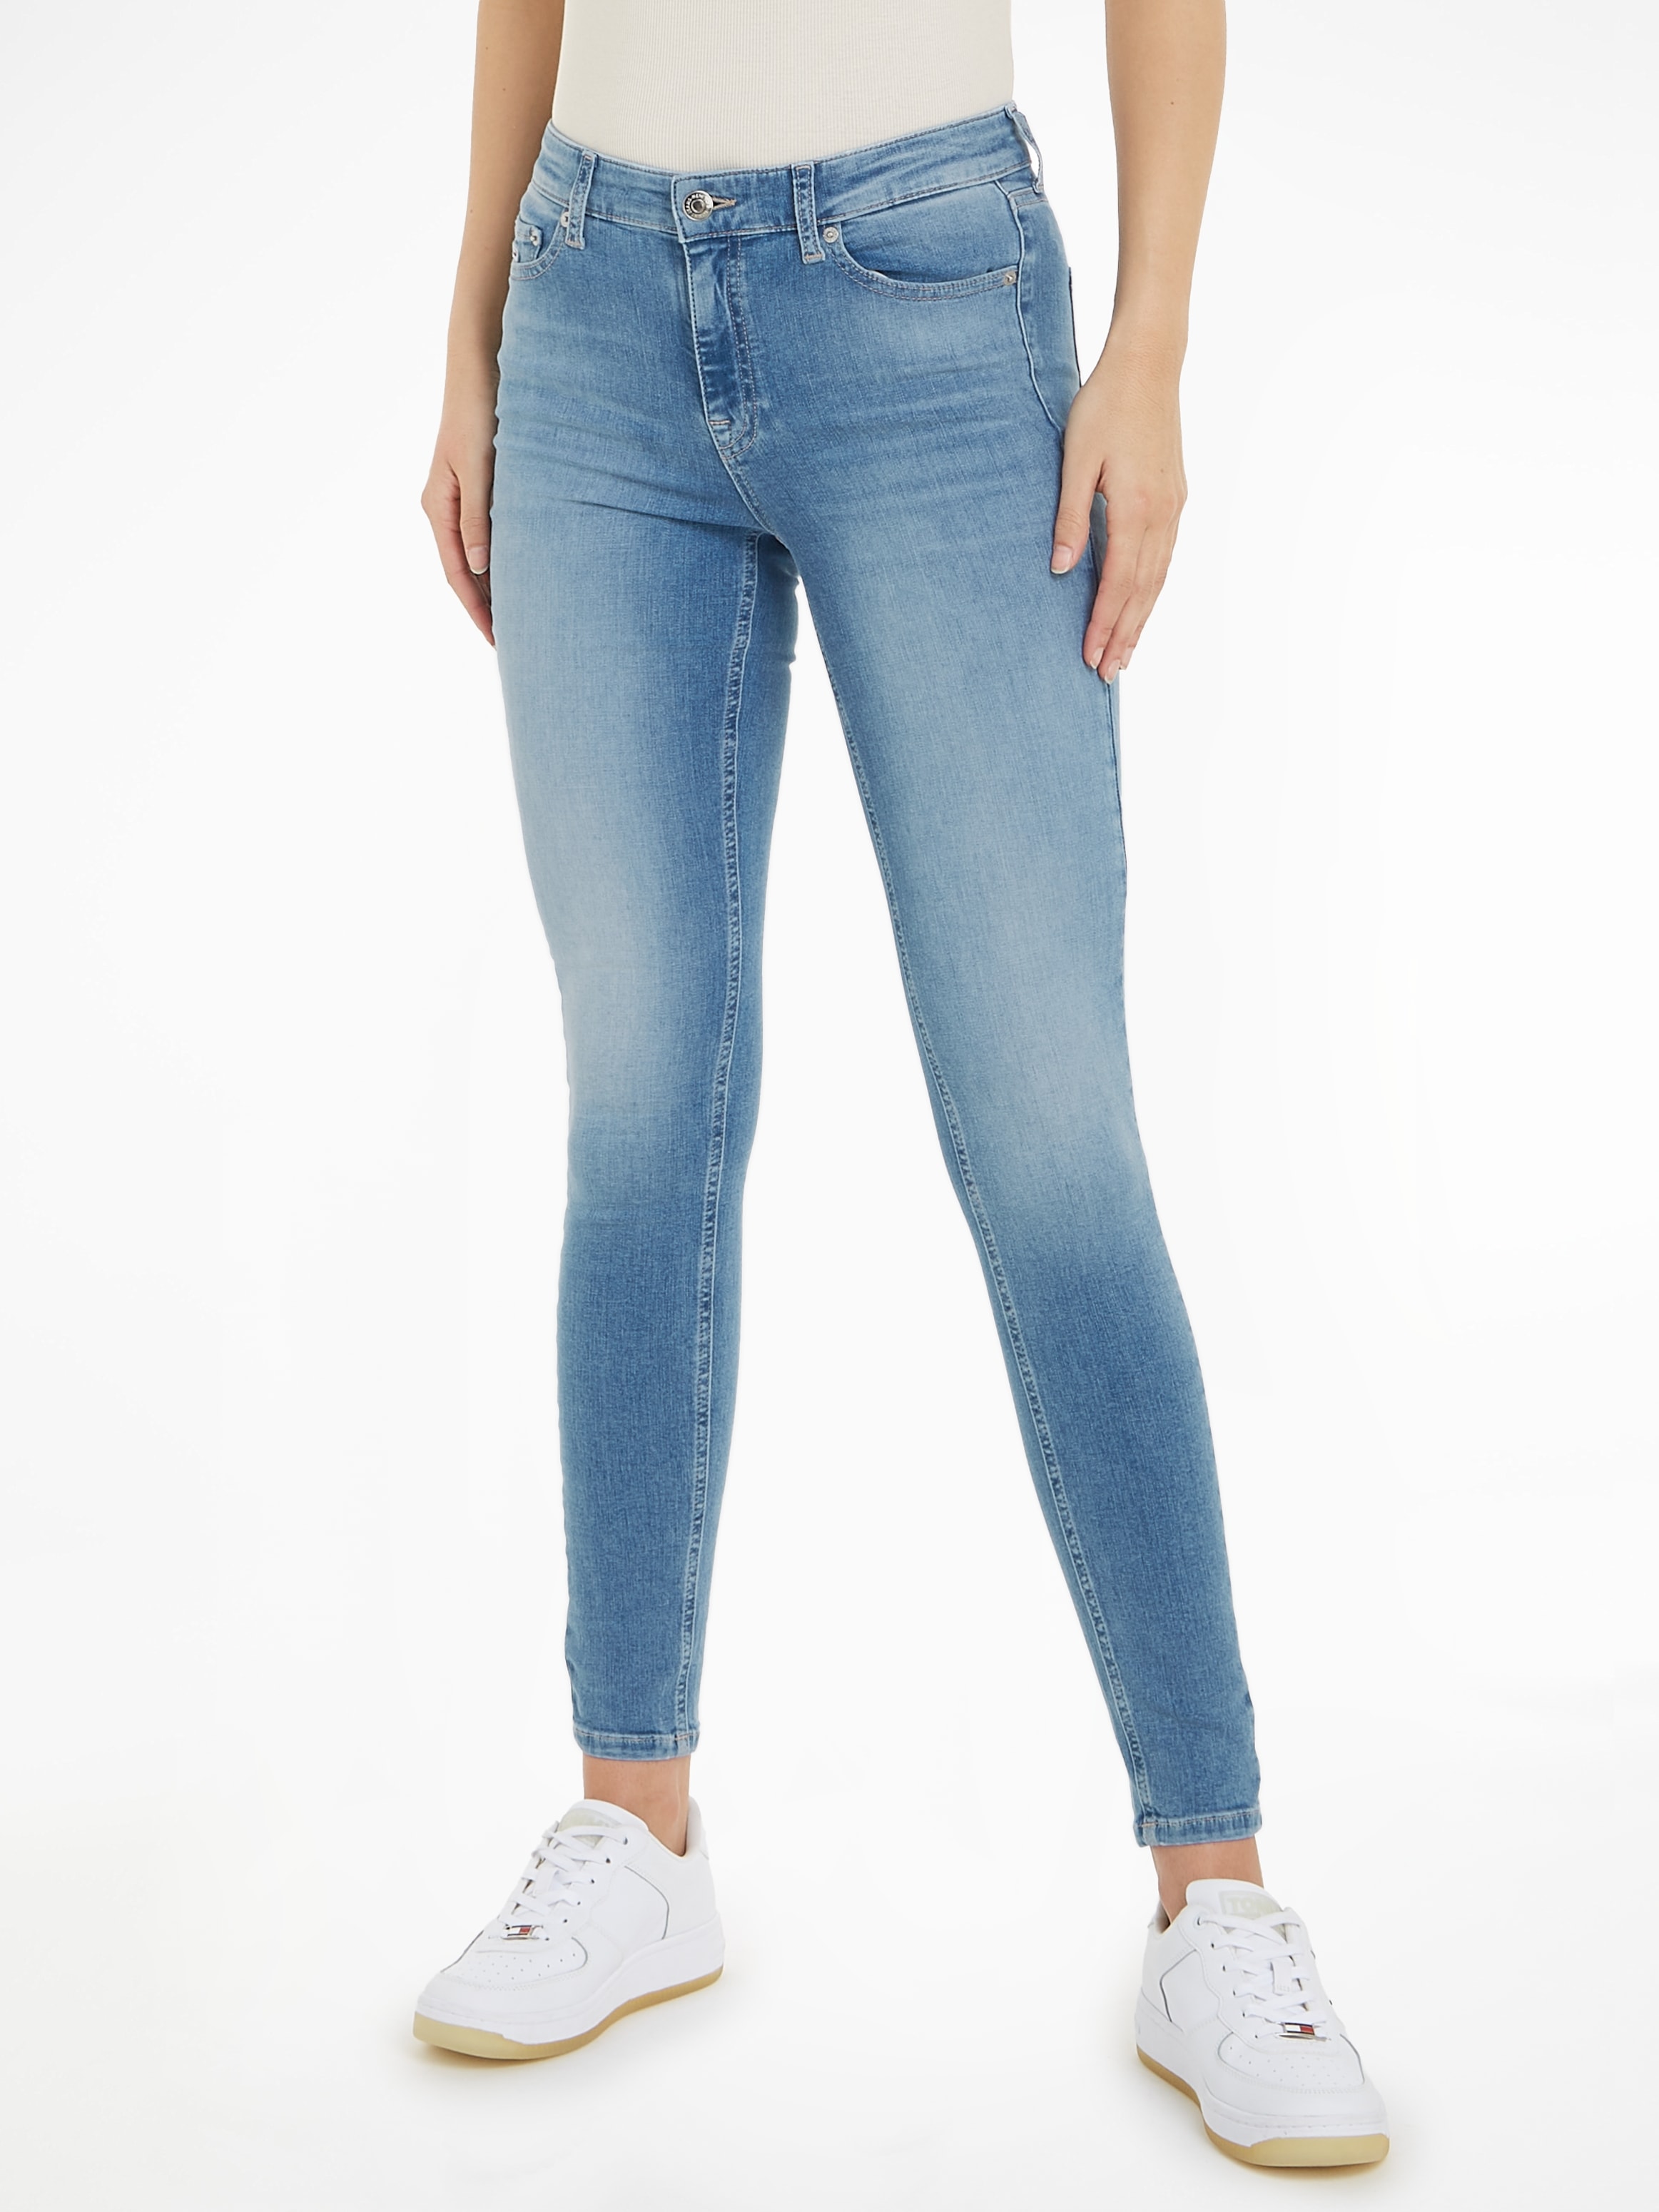 Jeans Bequeme mit kaufen Ledermarkenlabel »Nora«, Jeans Tommy